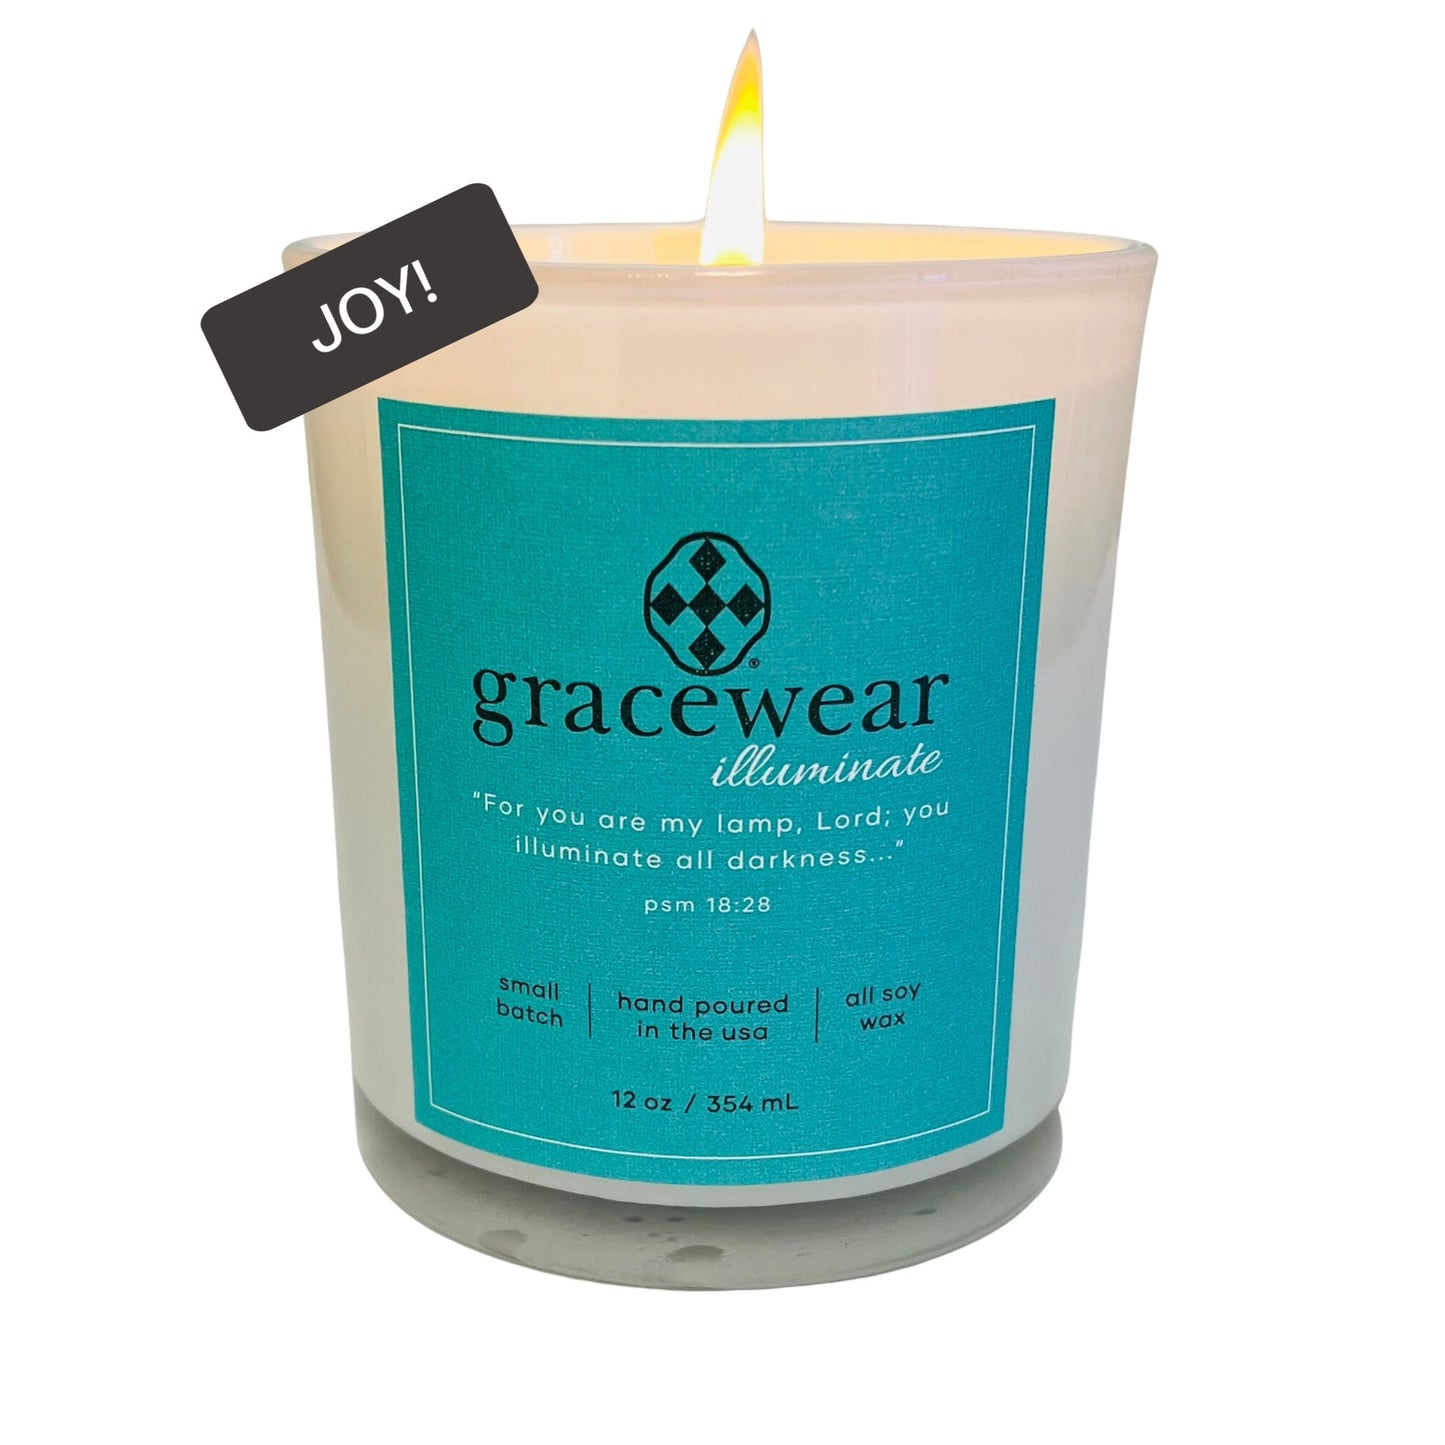 Gracewear Illuminate candle- JOY!